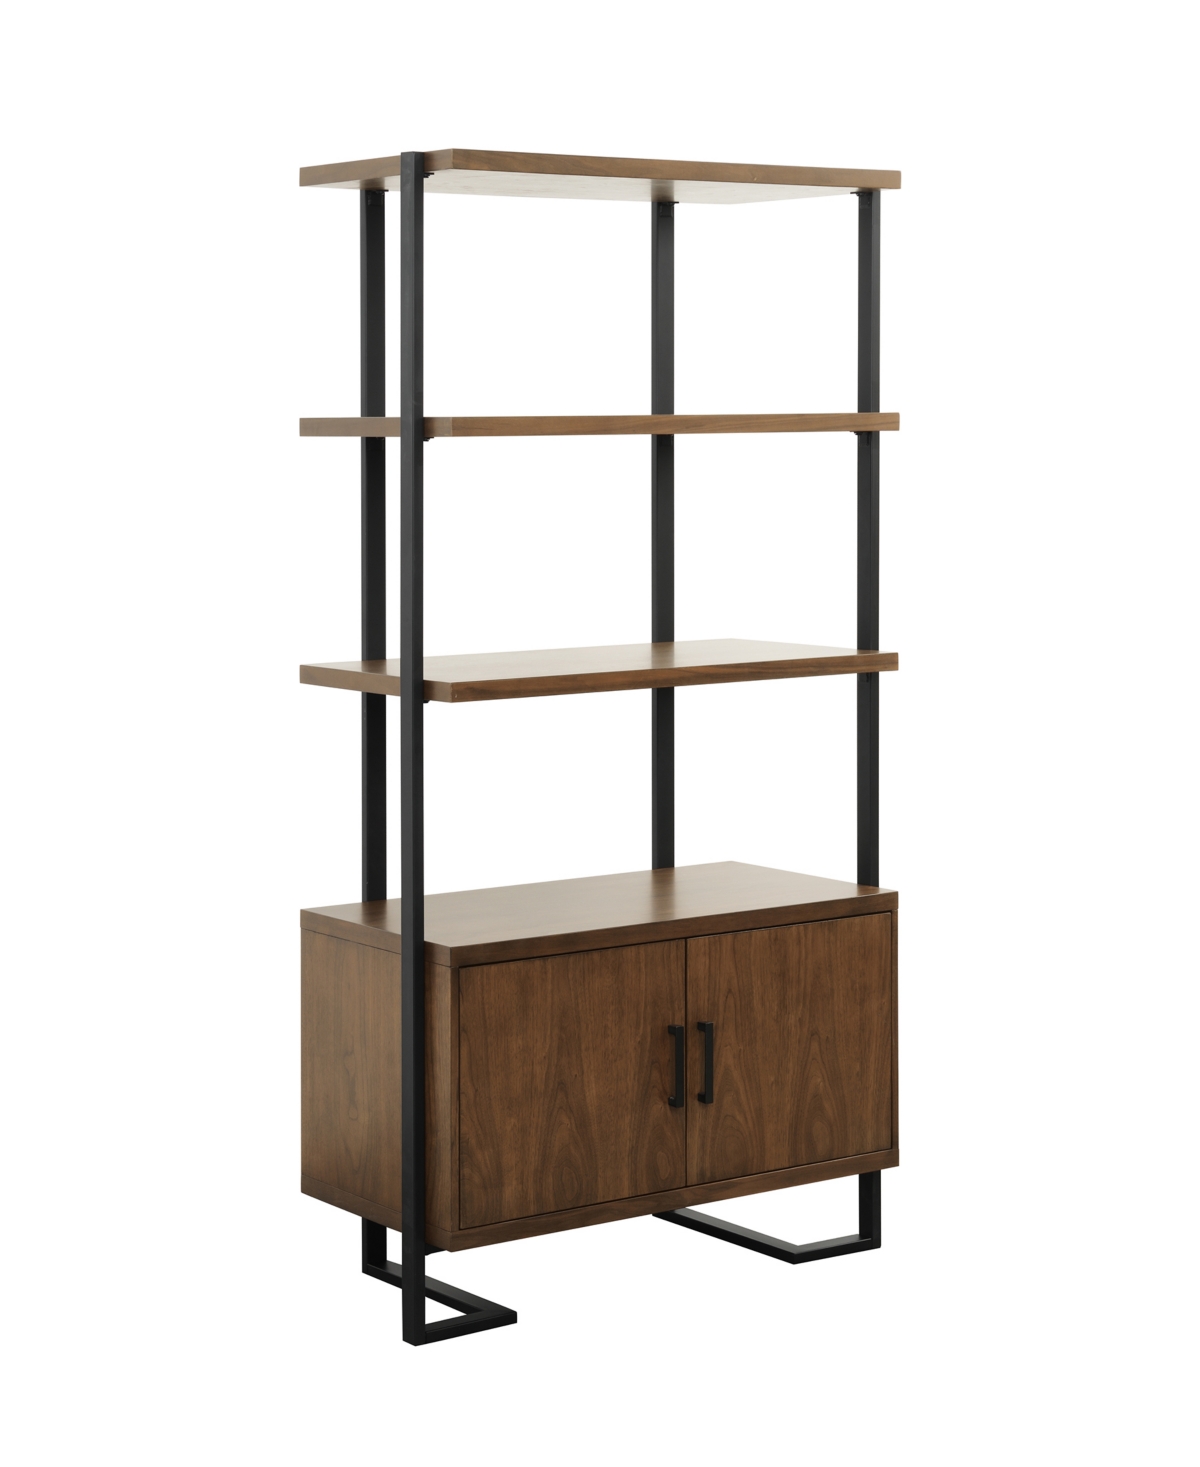 Furniture Helena Bookcase In -tone Finish- Walnut And Rustic Black Me